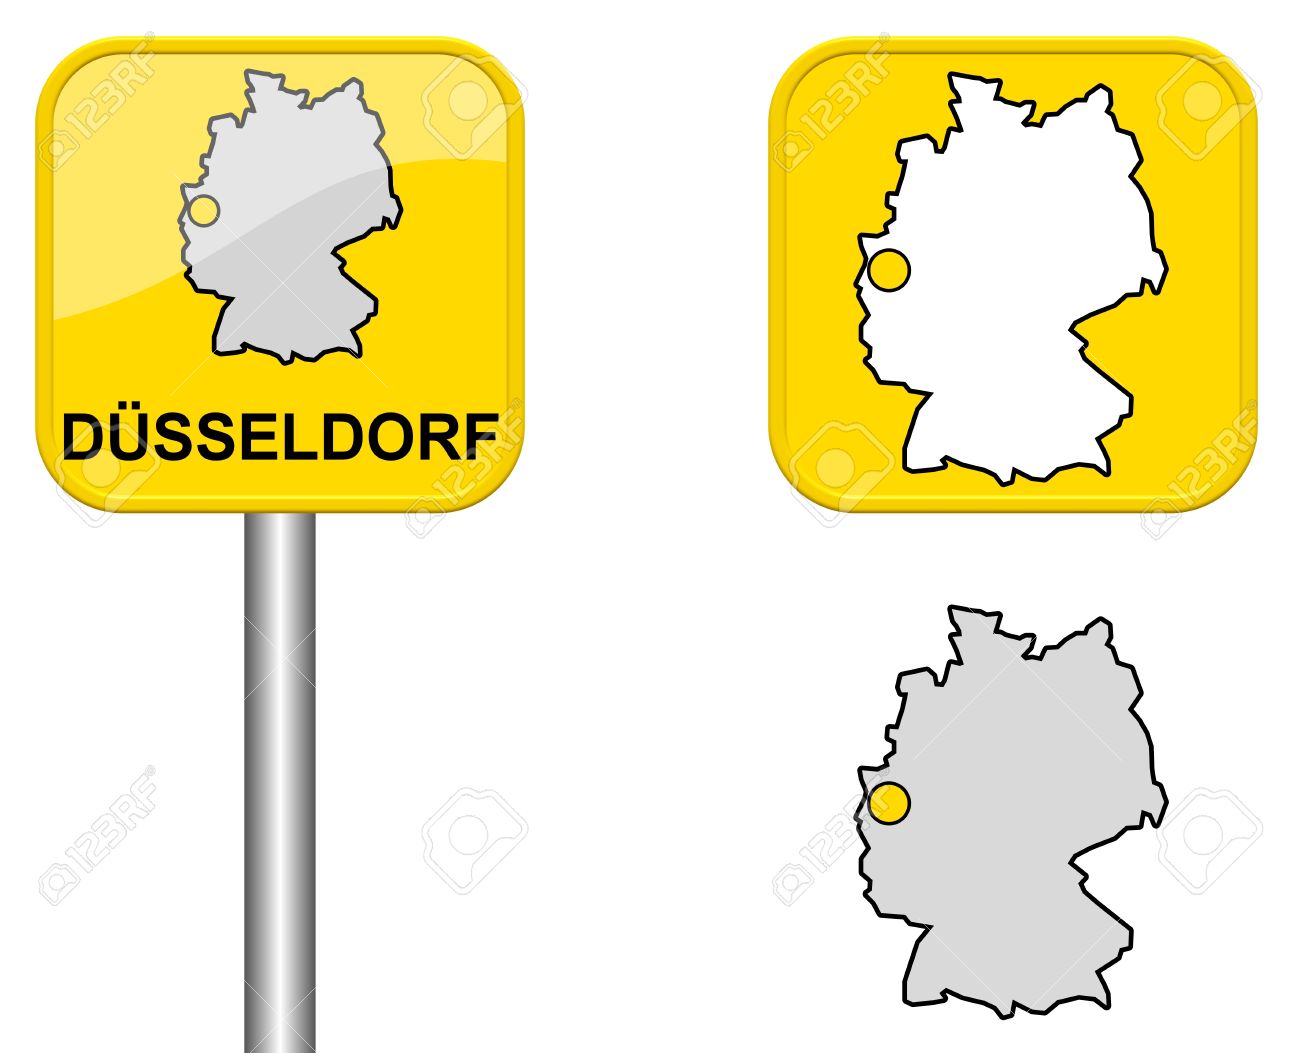 Dusseldorf.